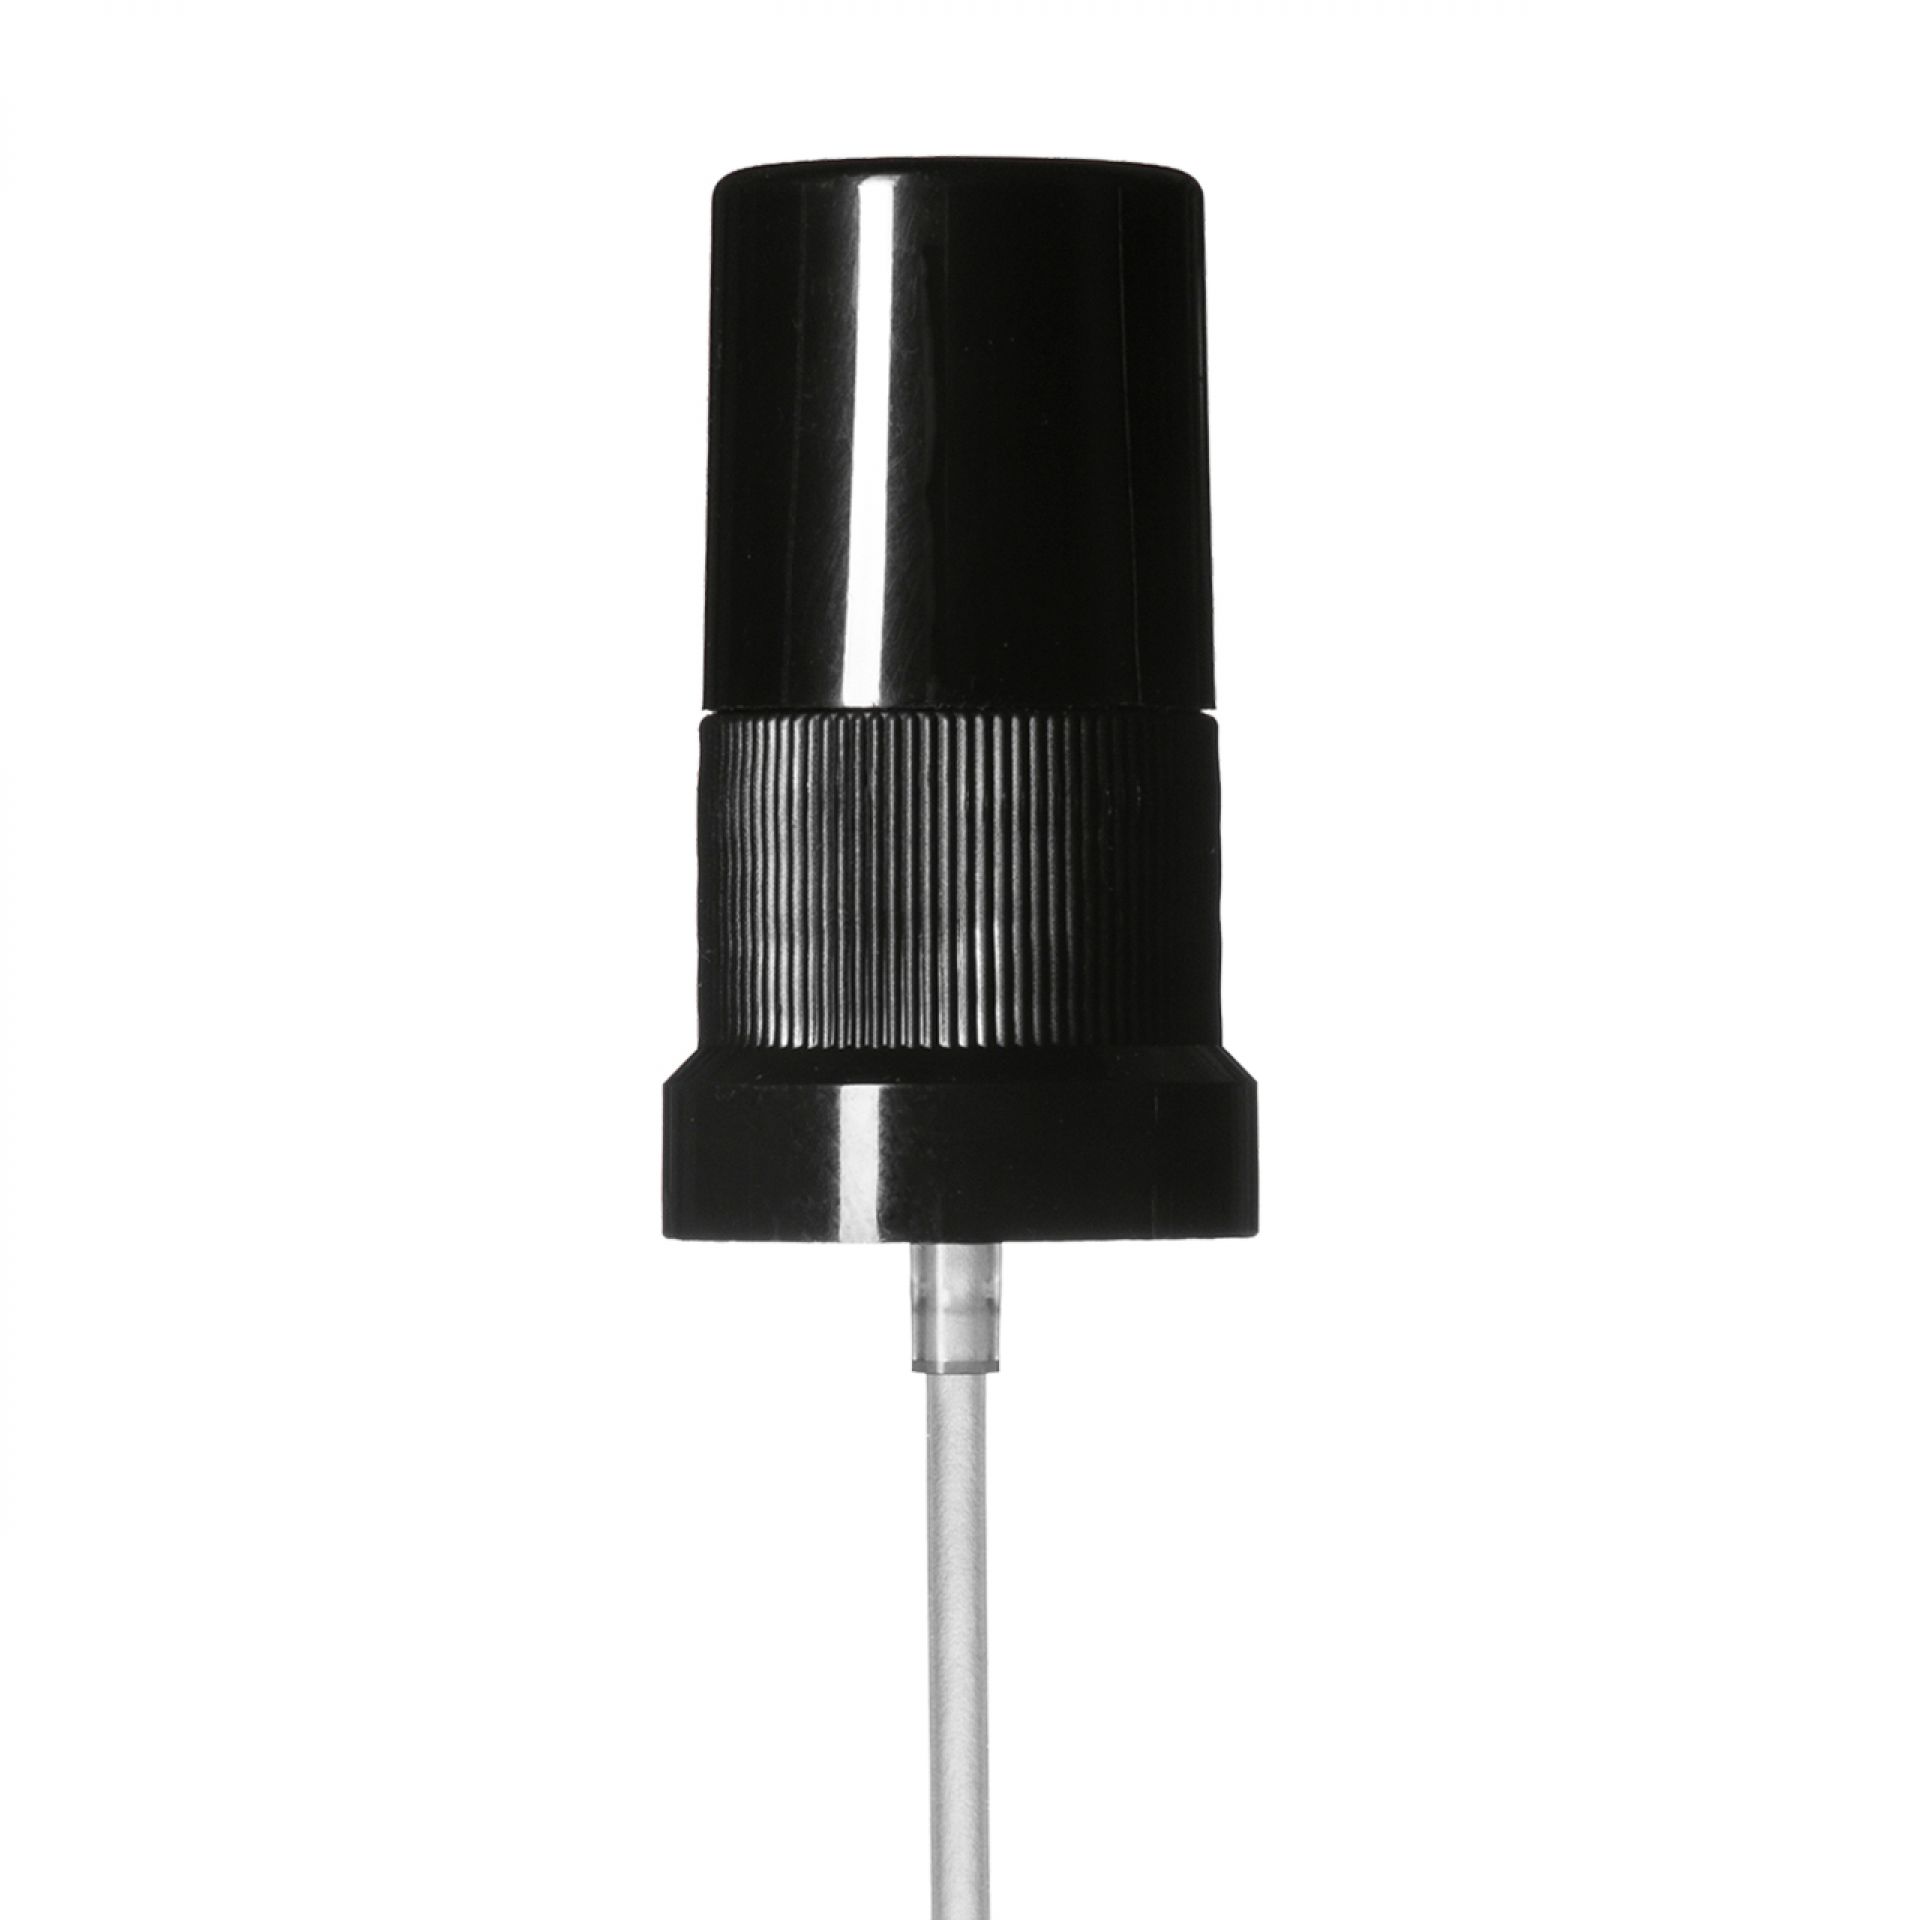 Mist sprayer Classic, DIN18, PP, black, ribbed, dose 0.10 ml, black overcap (Orion 100)